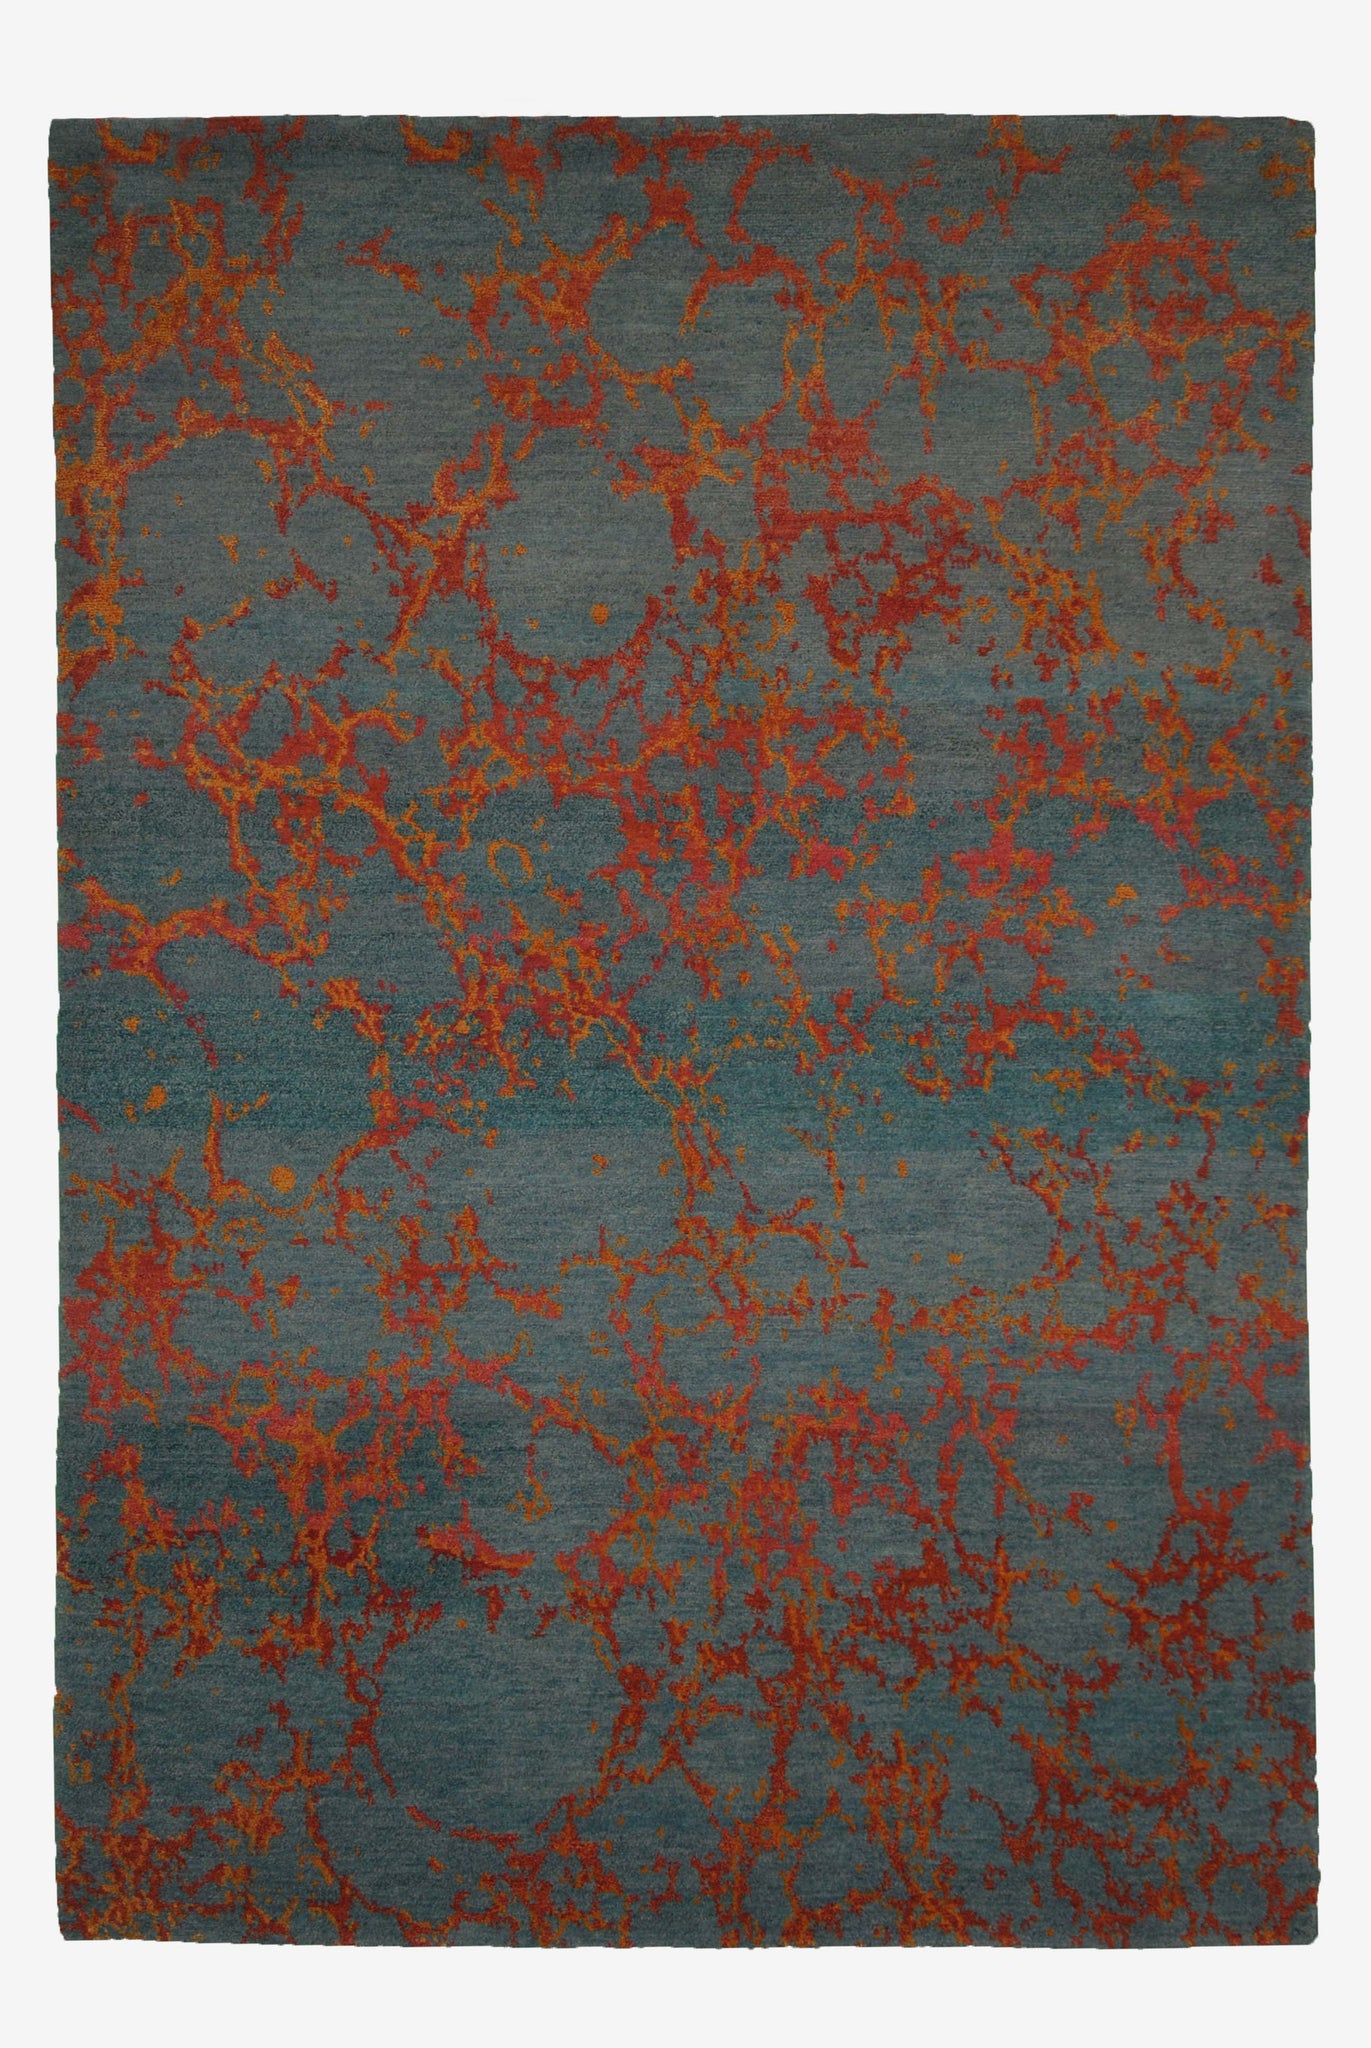 Hafiz 48455 - Blau, orange - 143 x 202 cm